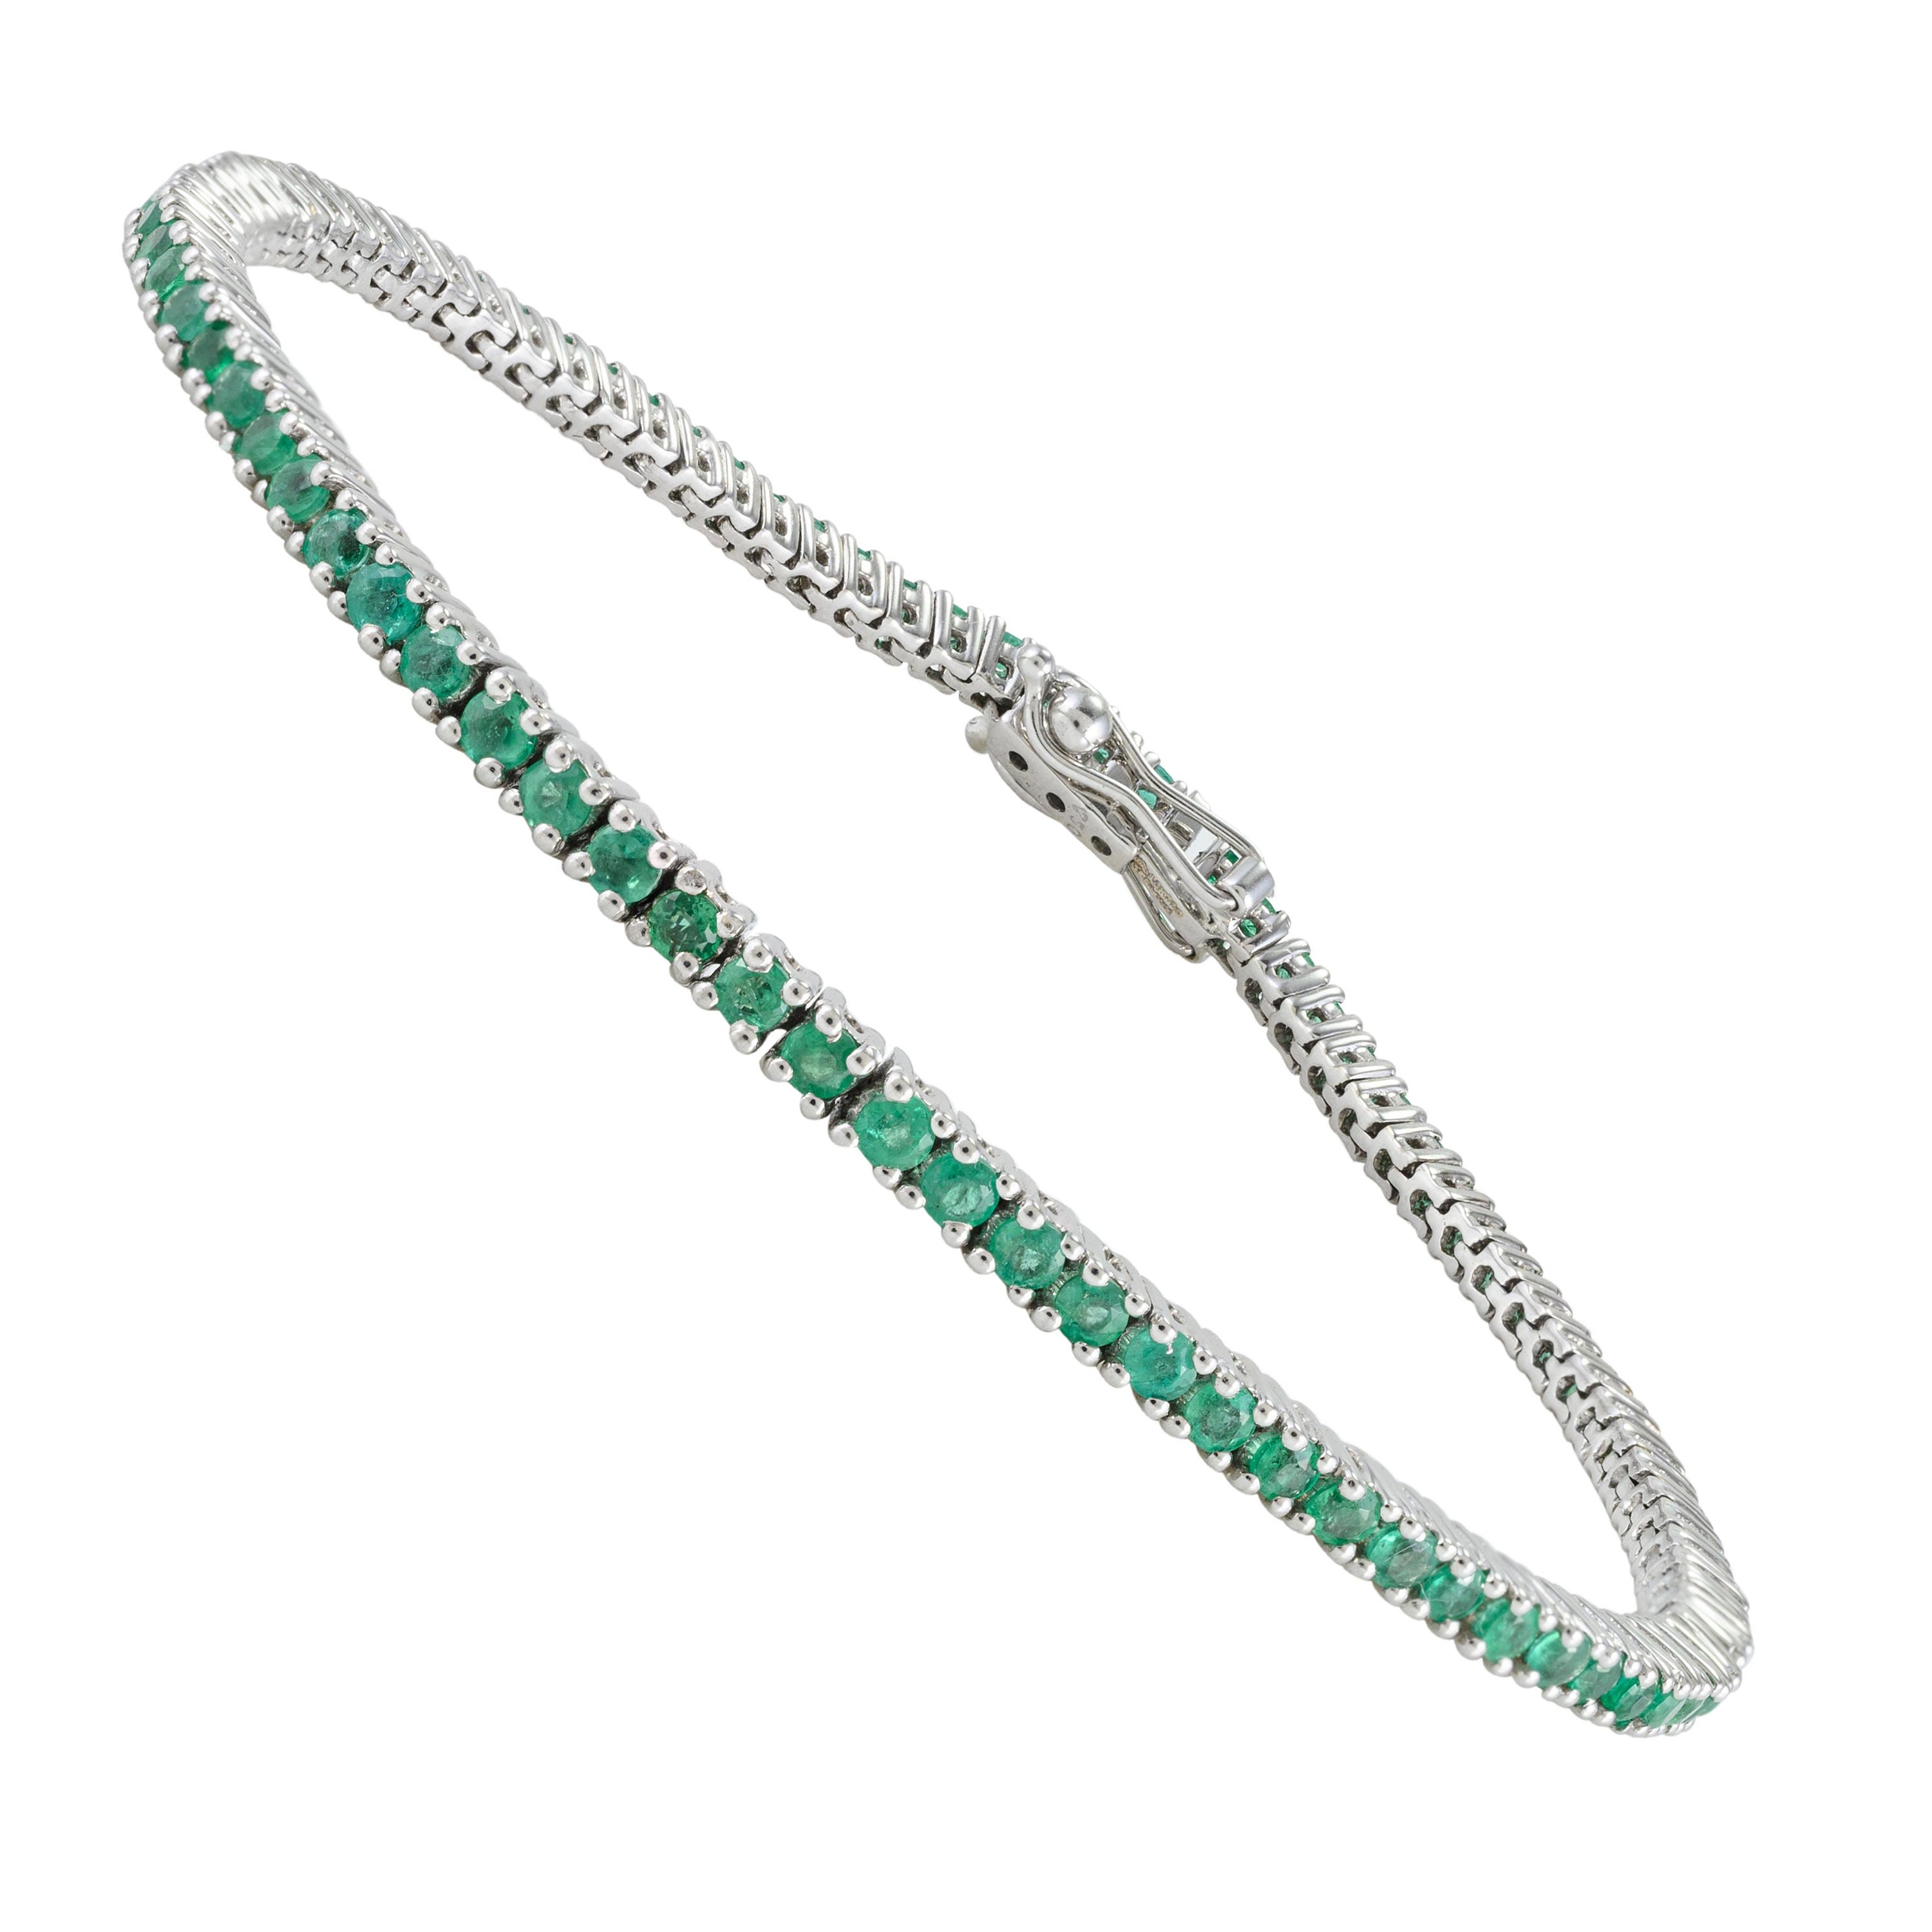 2.1 Carat Dainty Emerald May Birthstone Sleek Tennis Bracelet in 18k White Gold For Sale